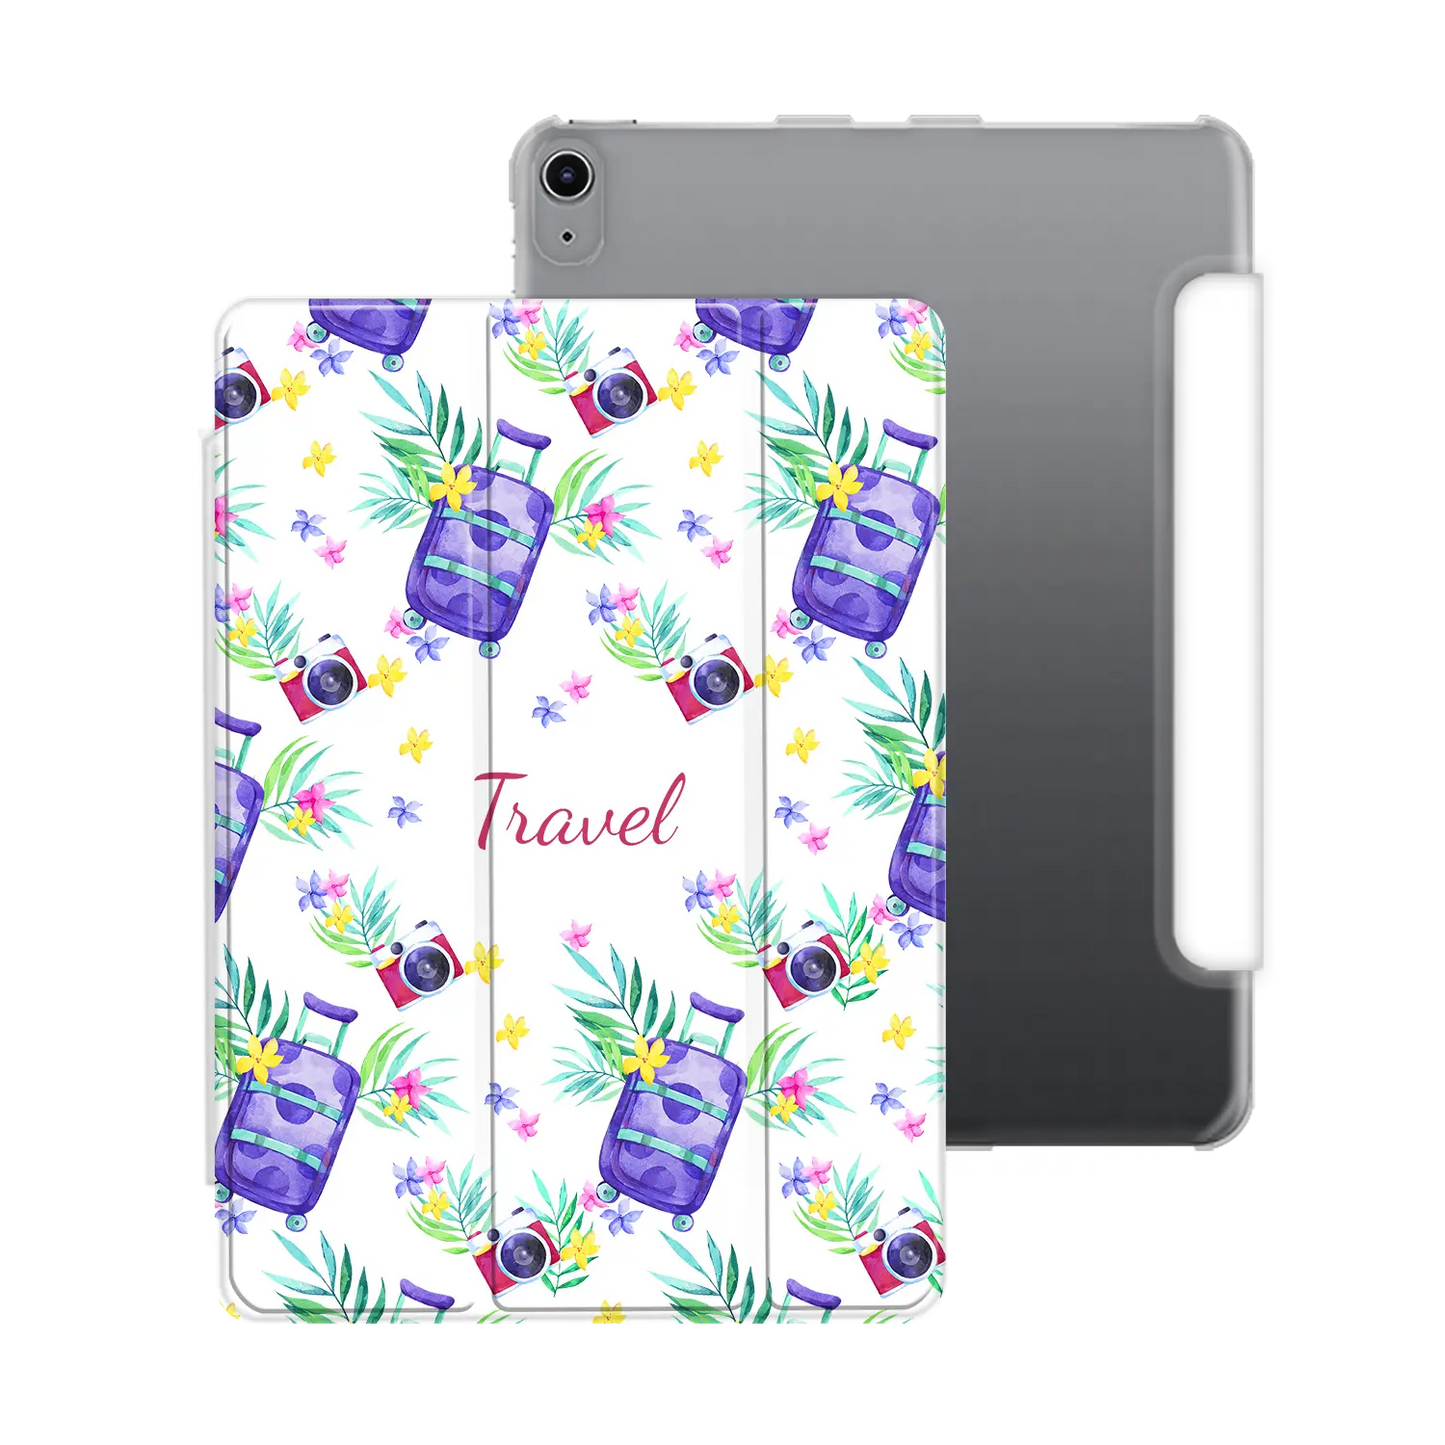 Suitcase Ready - Personalised iPad Case